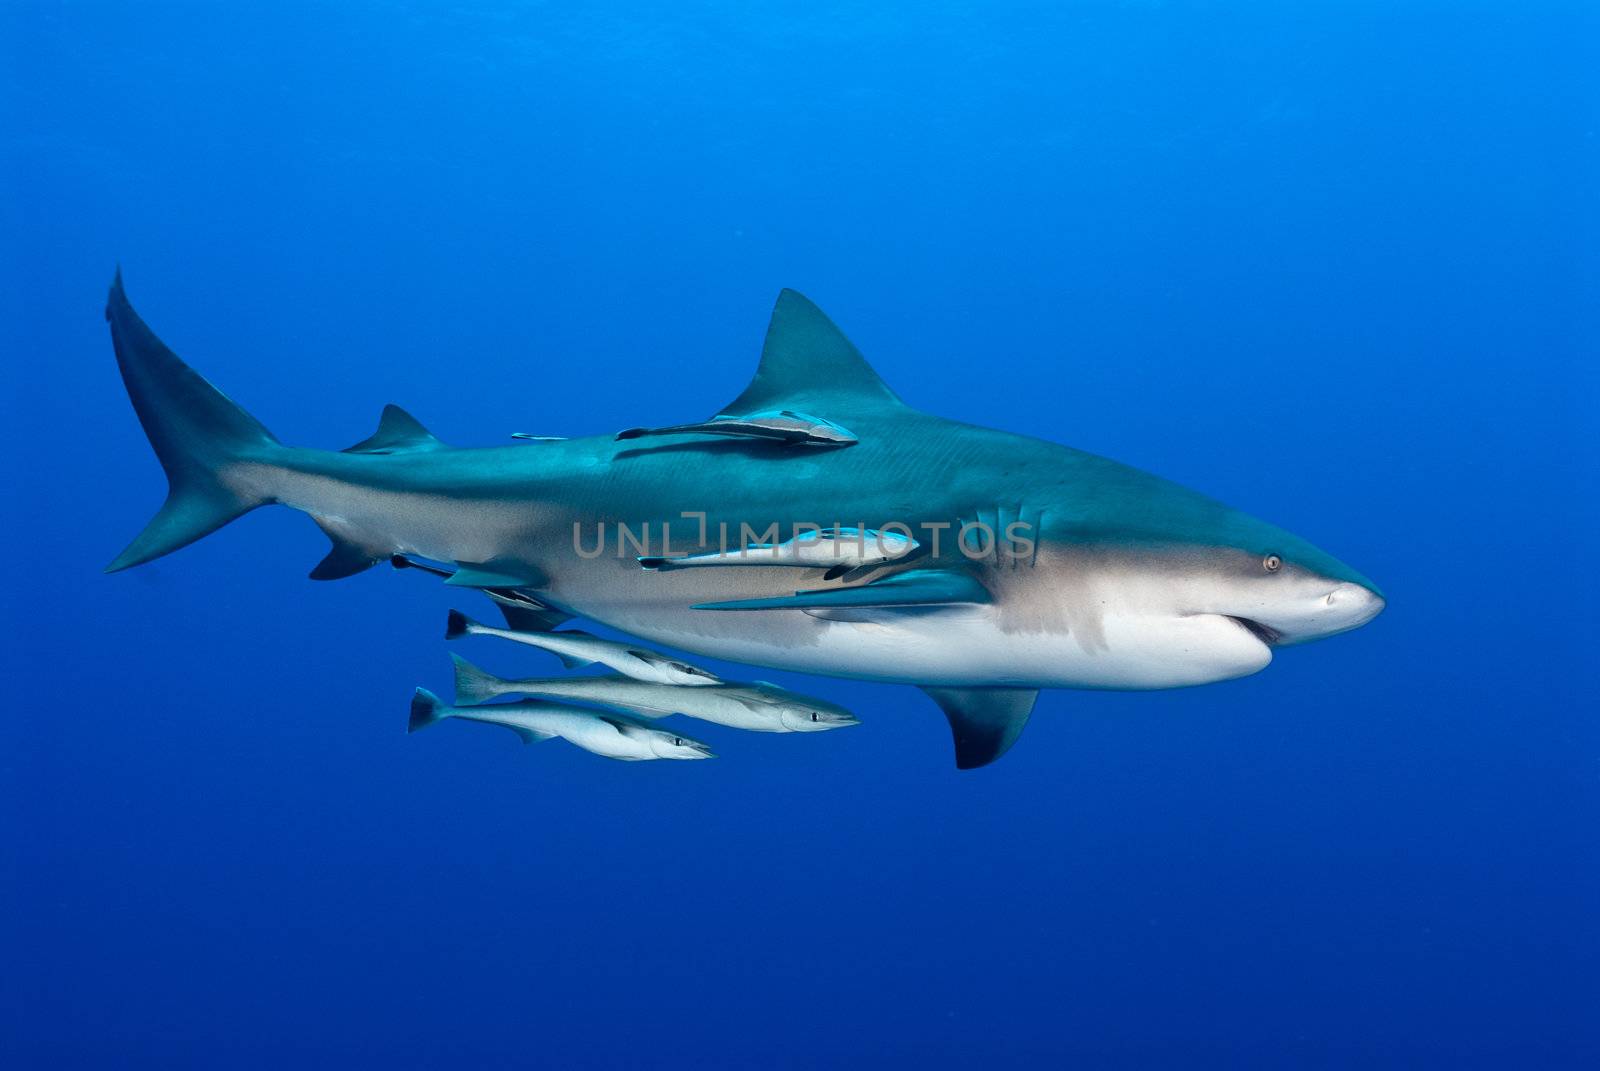 Bull shark in blue ocean water